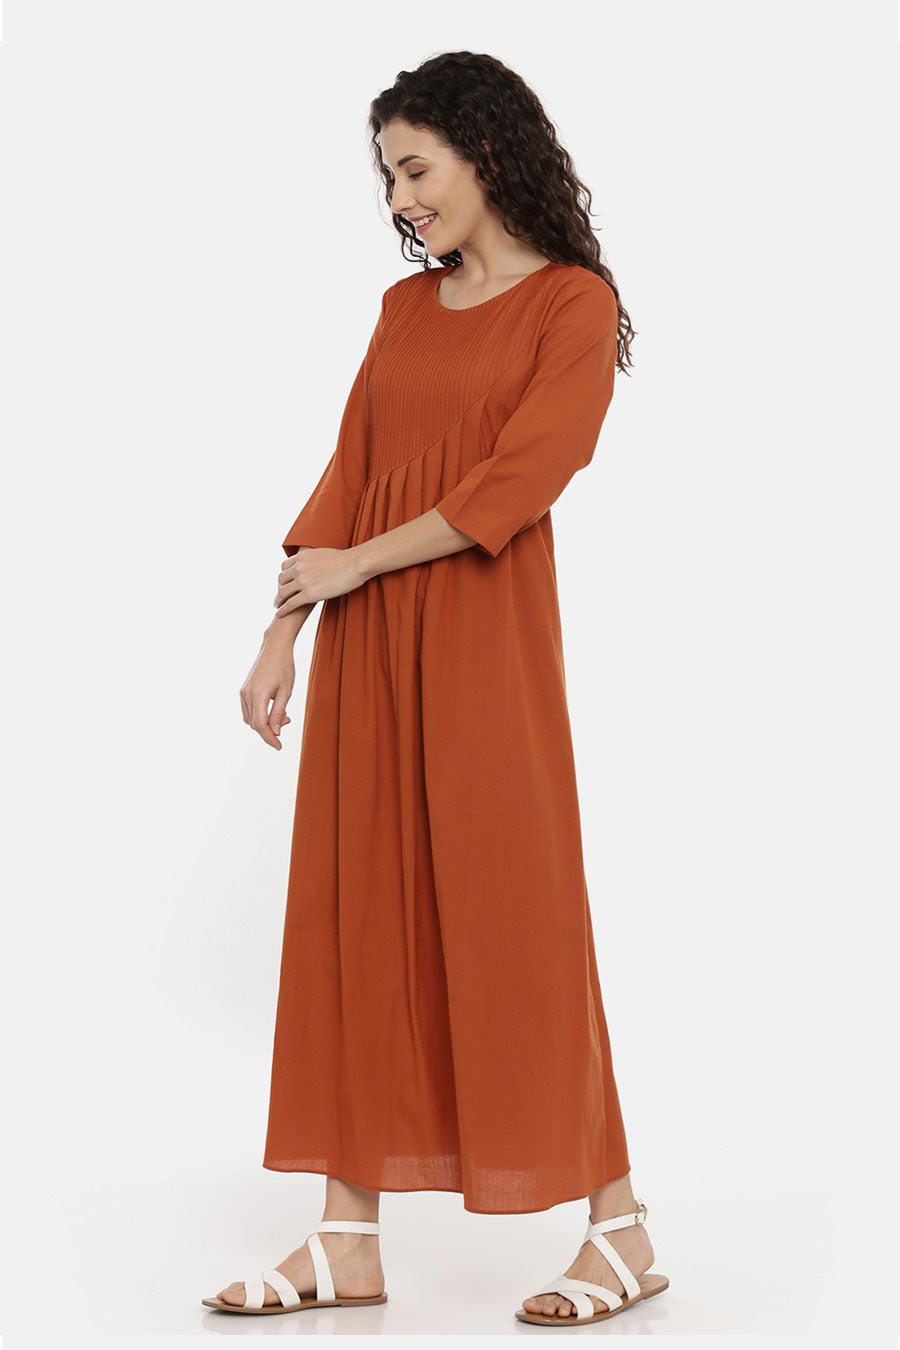 Rust Orange Cotton Pleated Dress